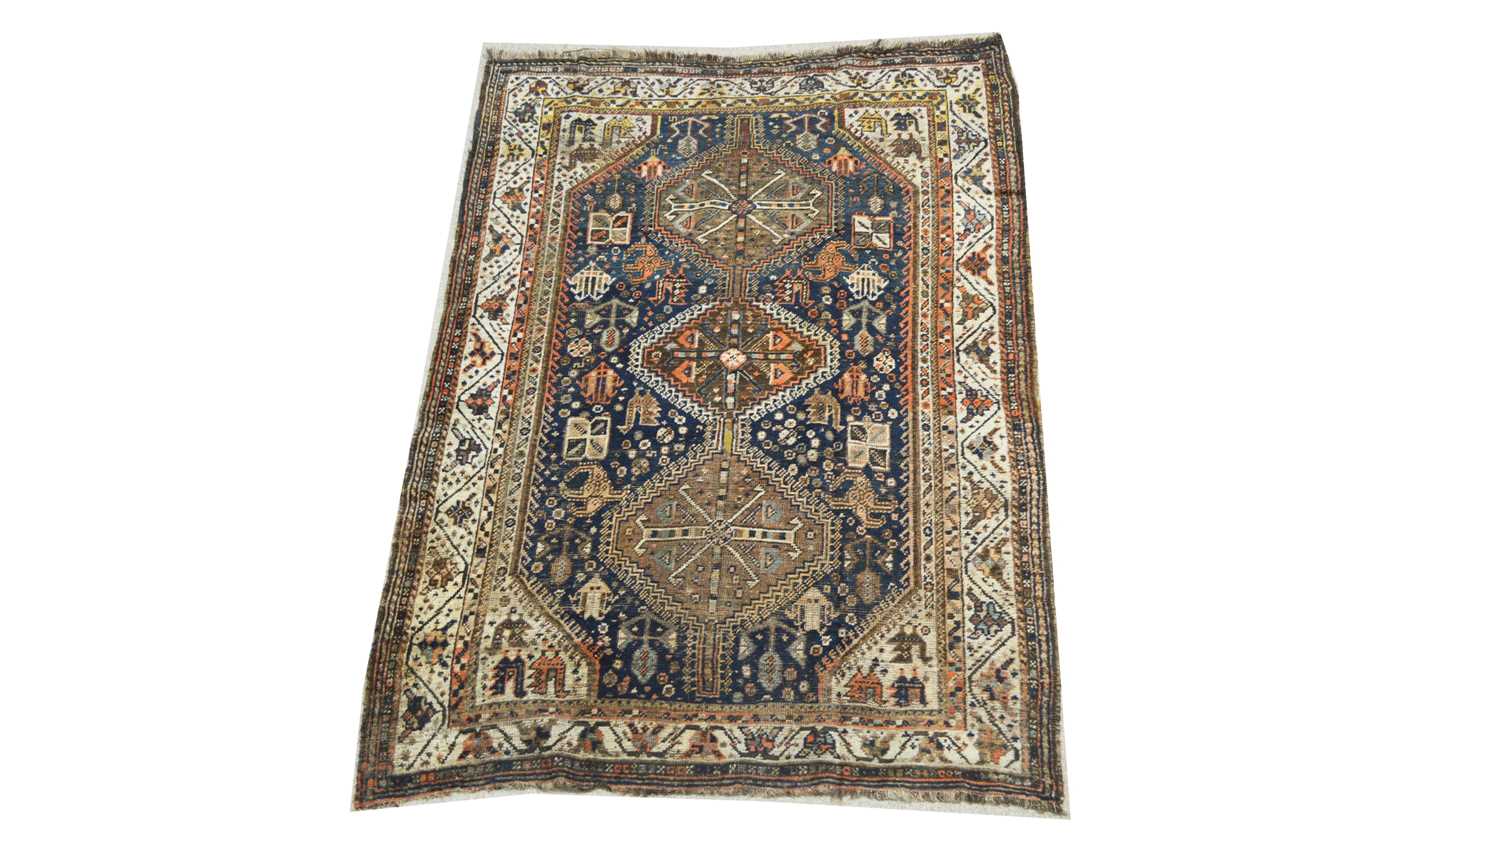 Lot 83 - An early 20th century Qashqai rug